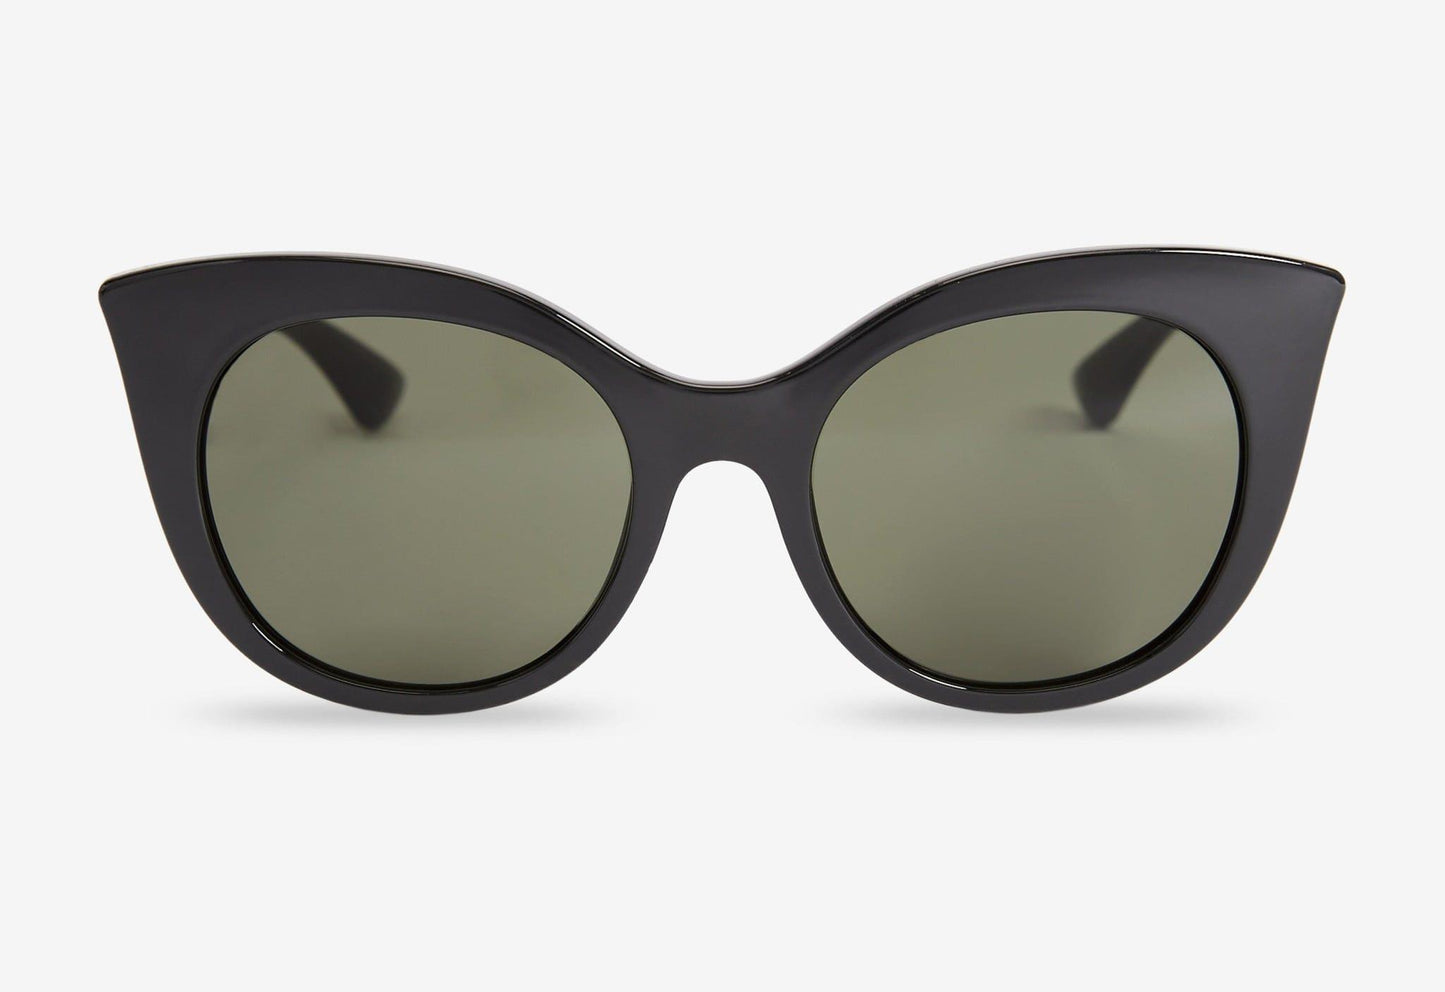 Thelma, Cat eye sunglasses for women dark green lens UV400 protection